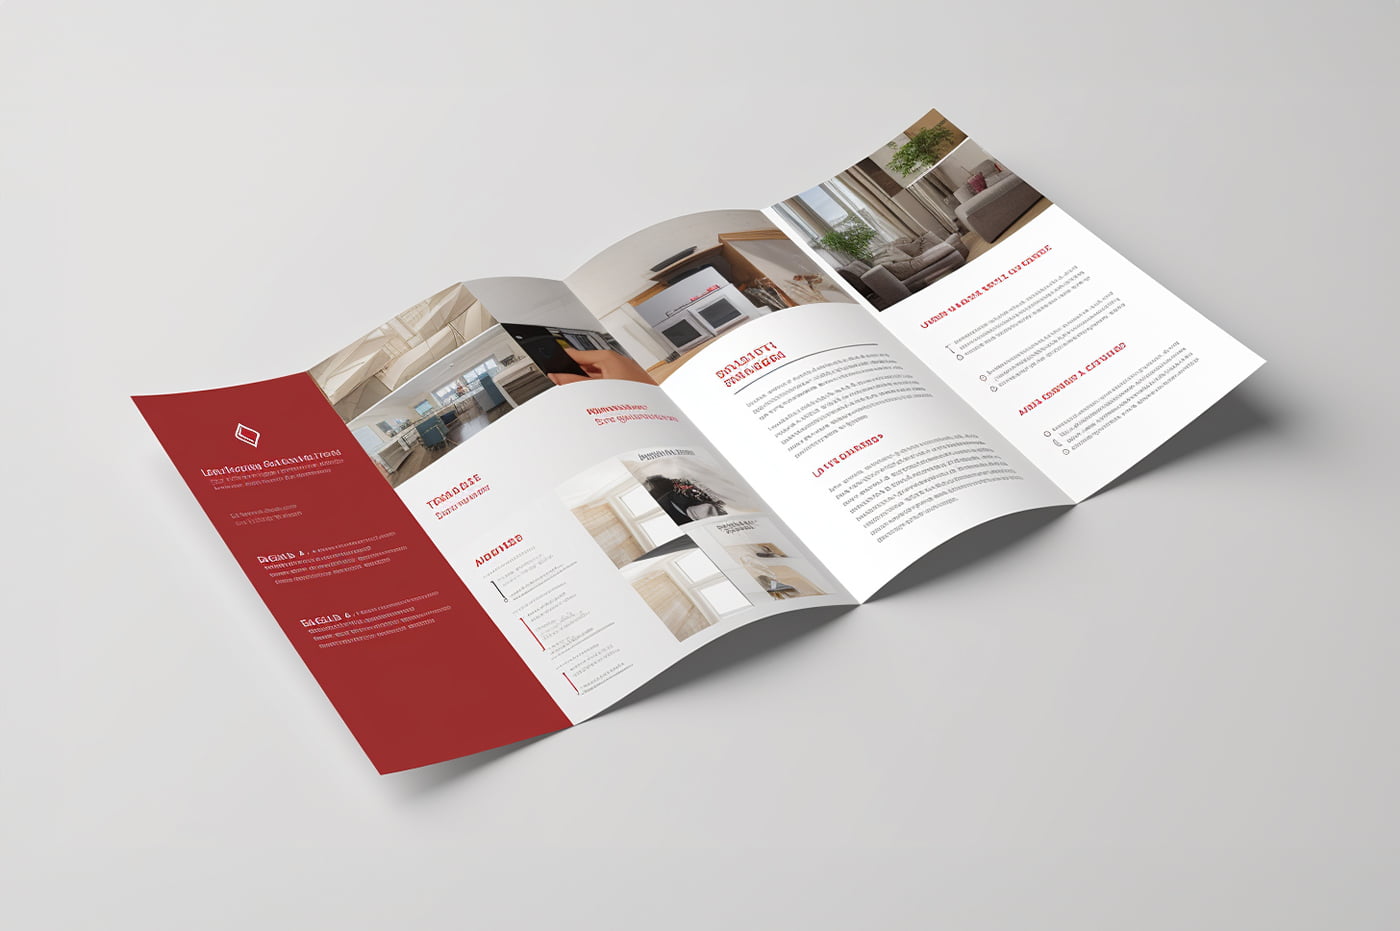 Brochure Design - as a part of Graphic Design Services by SagePixels, Melbourne